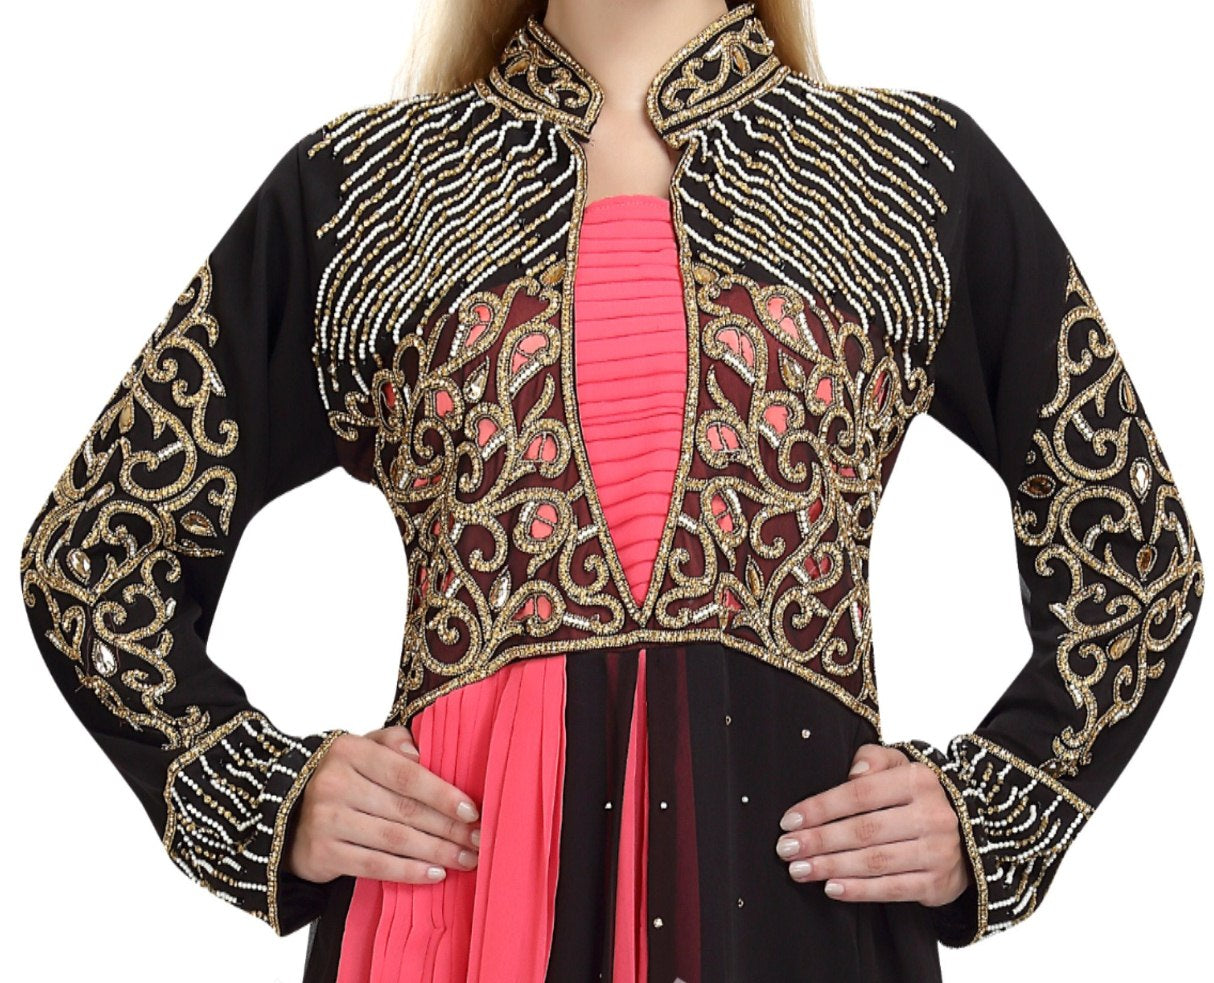 Designer Kaftan Gown in Black And Pink Bridesmaid Dress - Maxim Creation